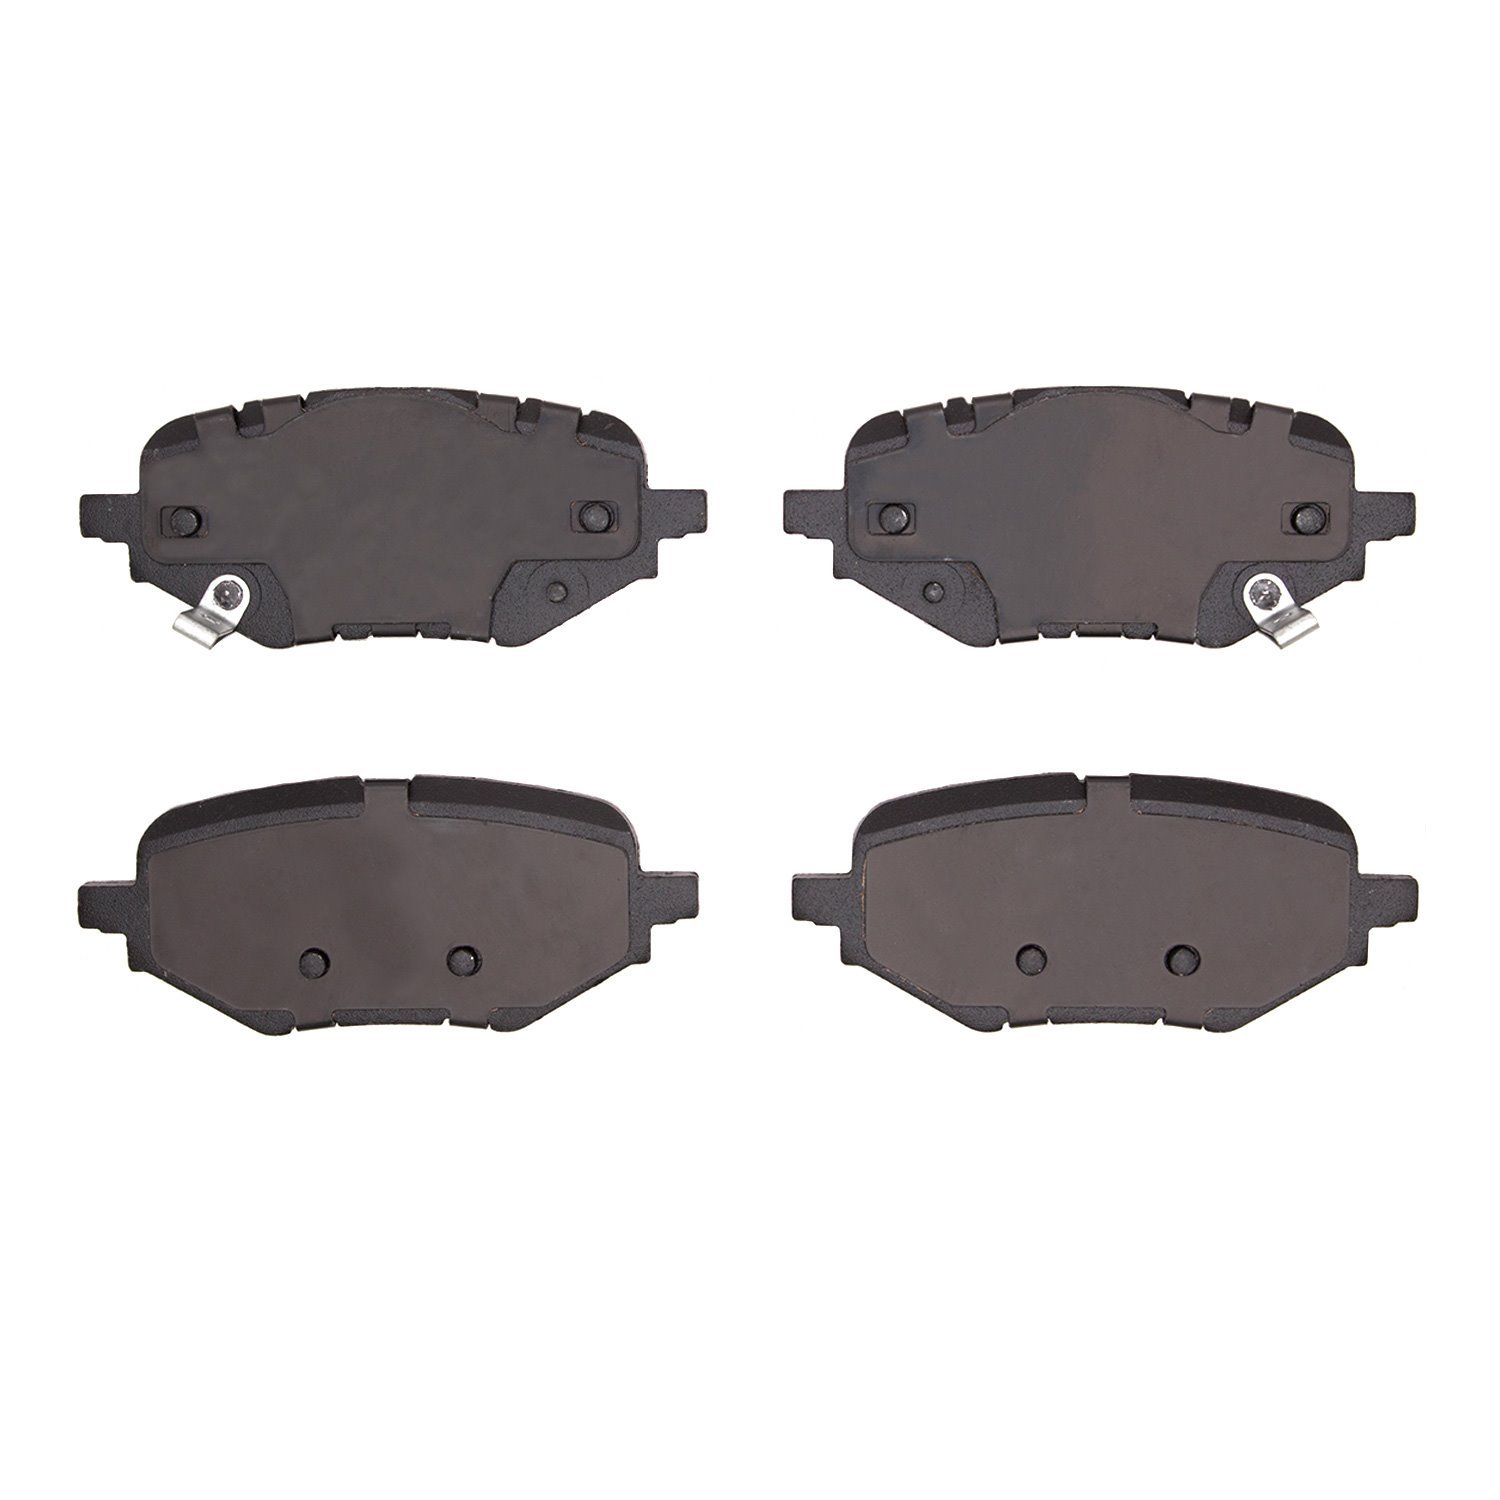 1551-2116-00 5000 Advanced Ceramic Brake Pads, Fits Select Acura/Honda, Position: Rear